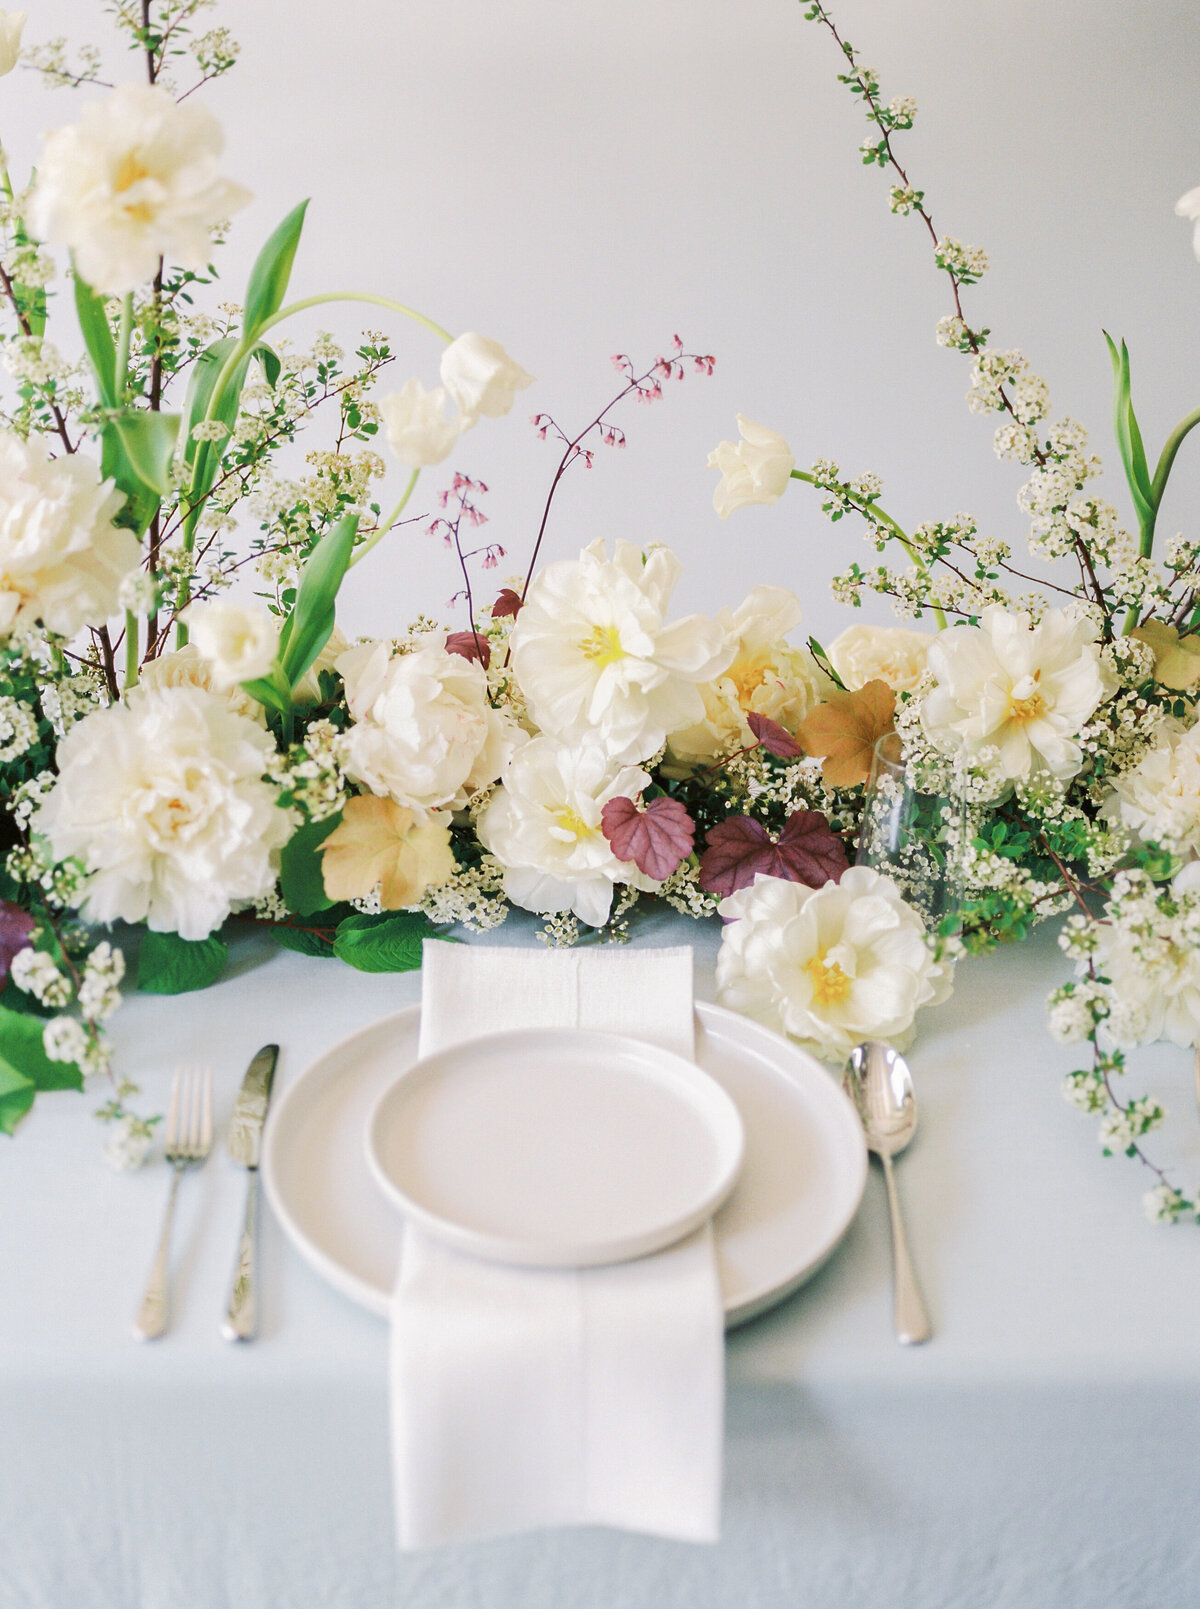 Atelier-Carmel-Wedding-Florist-GALLERY-centerpieces-2